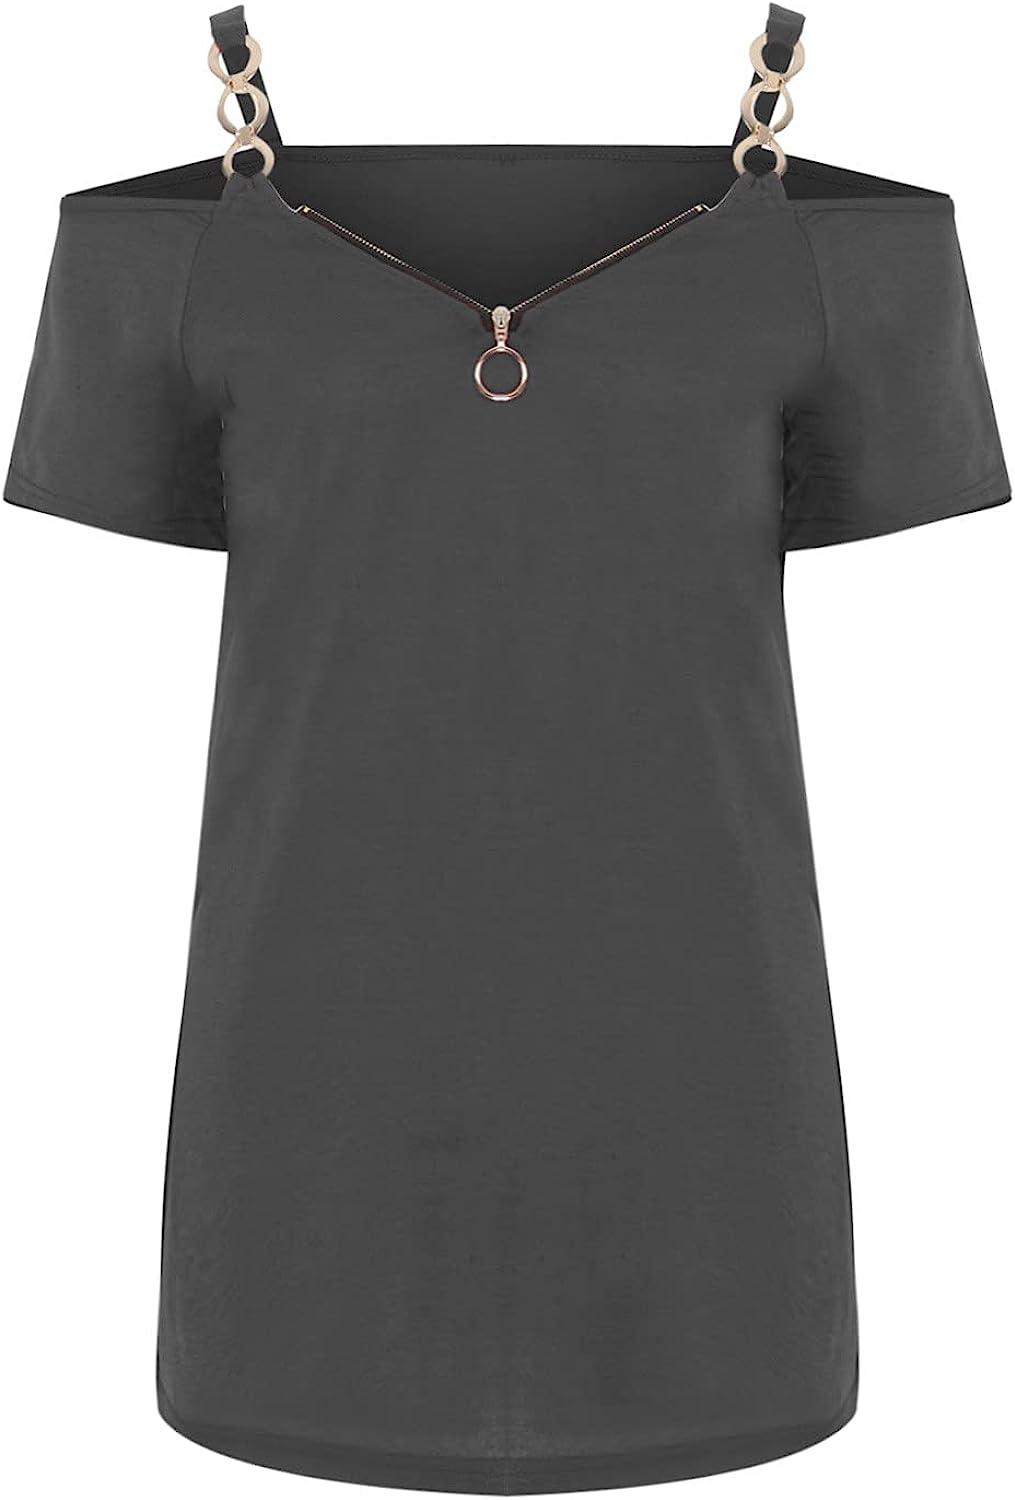 LADIGASU Womens Goth Plus Size T-Shirt Summer Cold Shoulder Short Sleeve  Blouse Tops Sexy V Neck Tunic Top XX-Large C-black